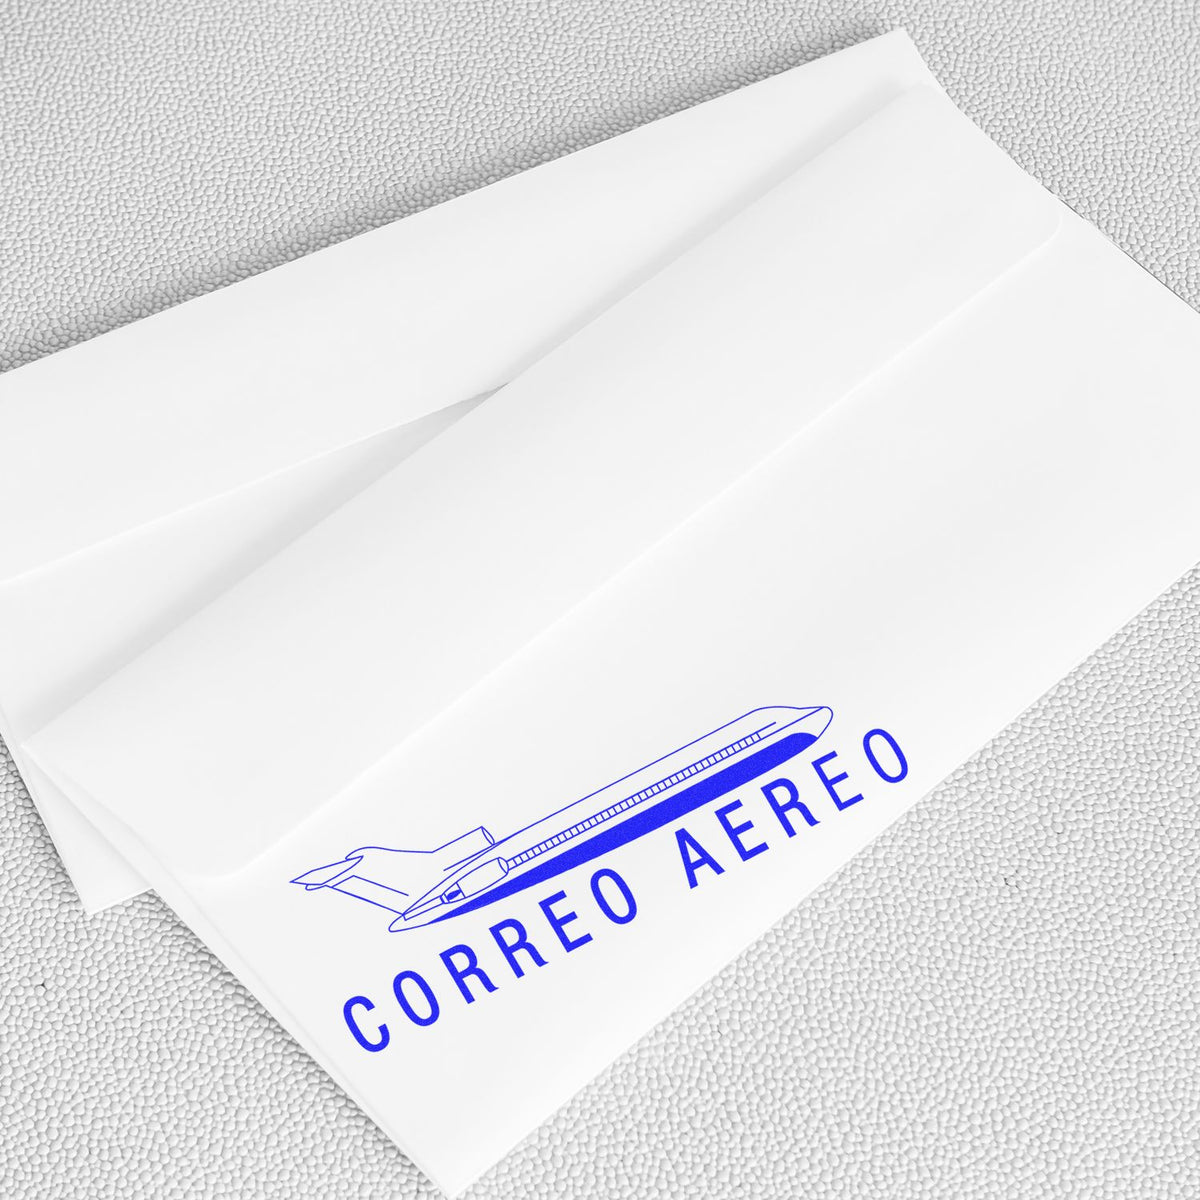 Large Self-Inking Correo Aero Stamp In Use Photo